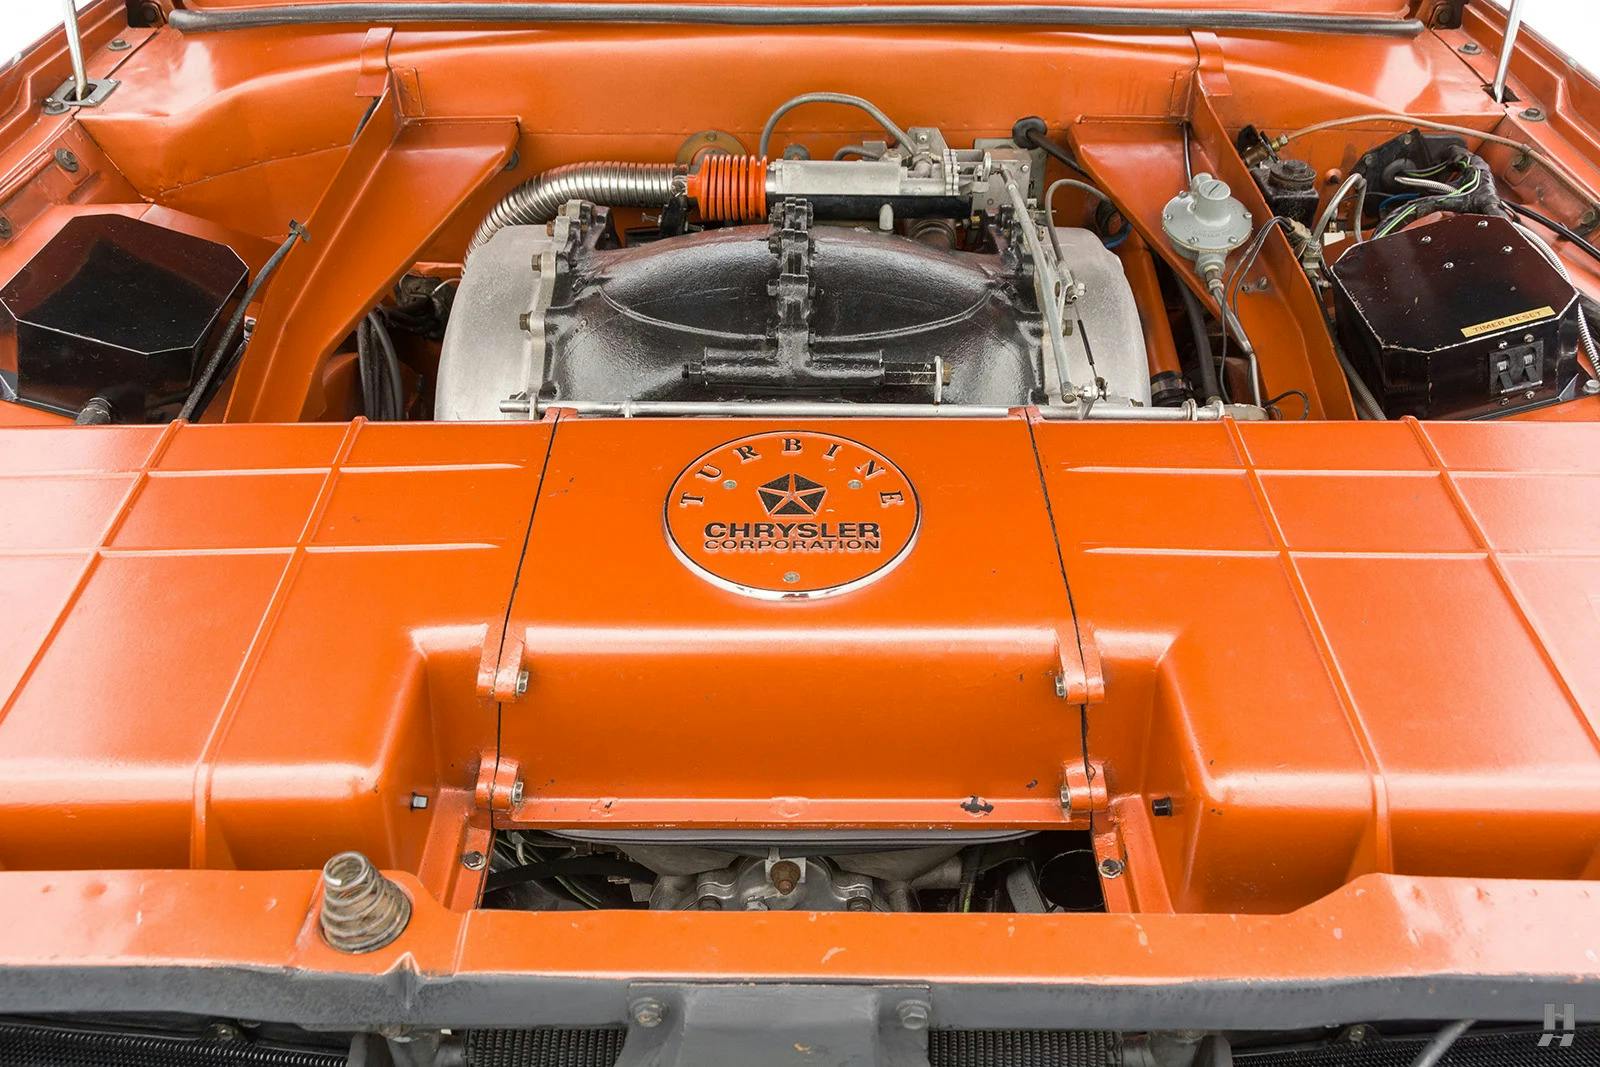 1963 Chrysler Turbine Car engine bay front